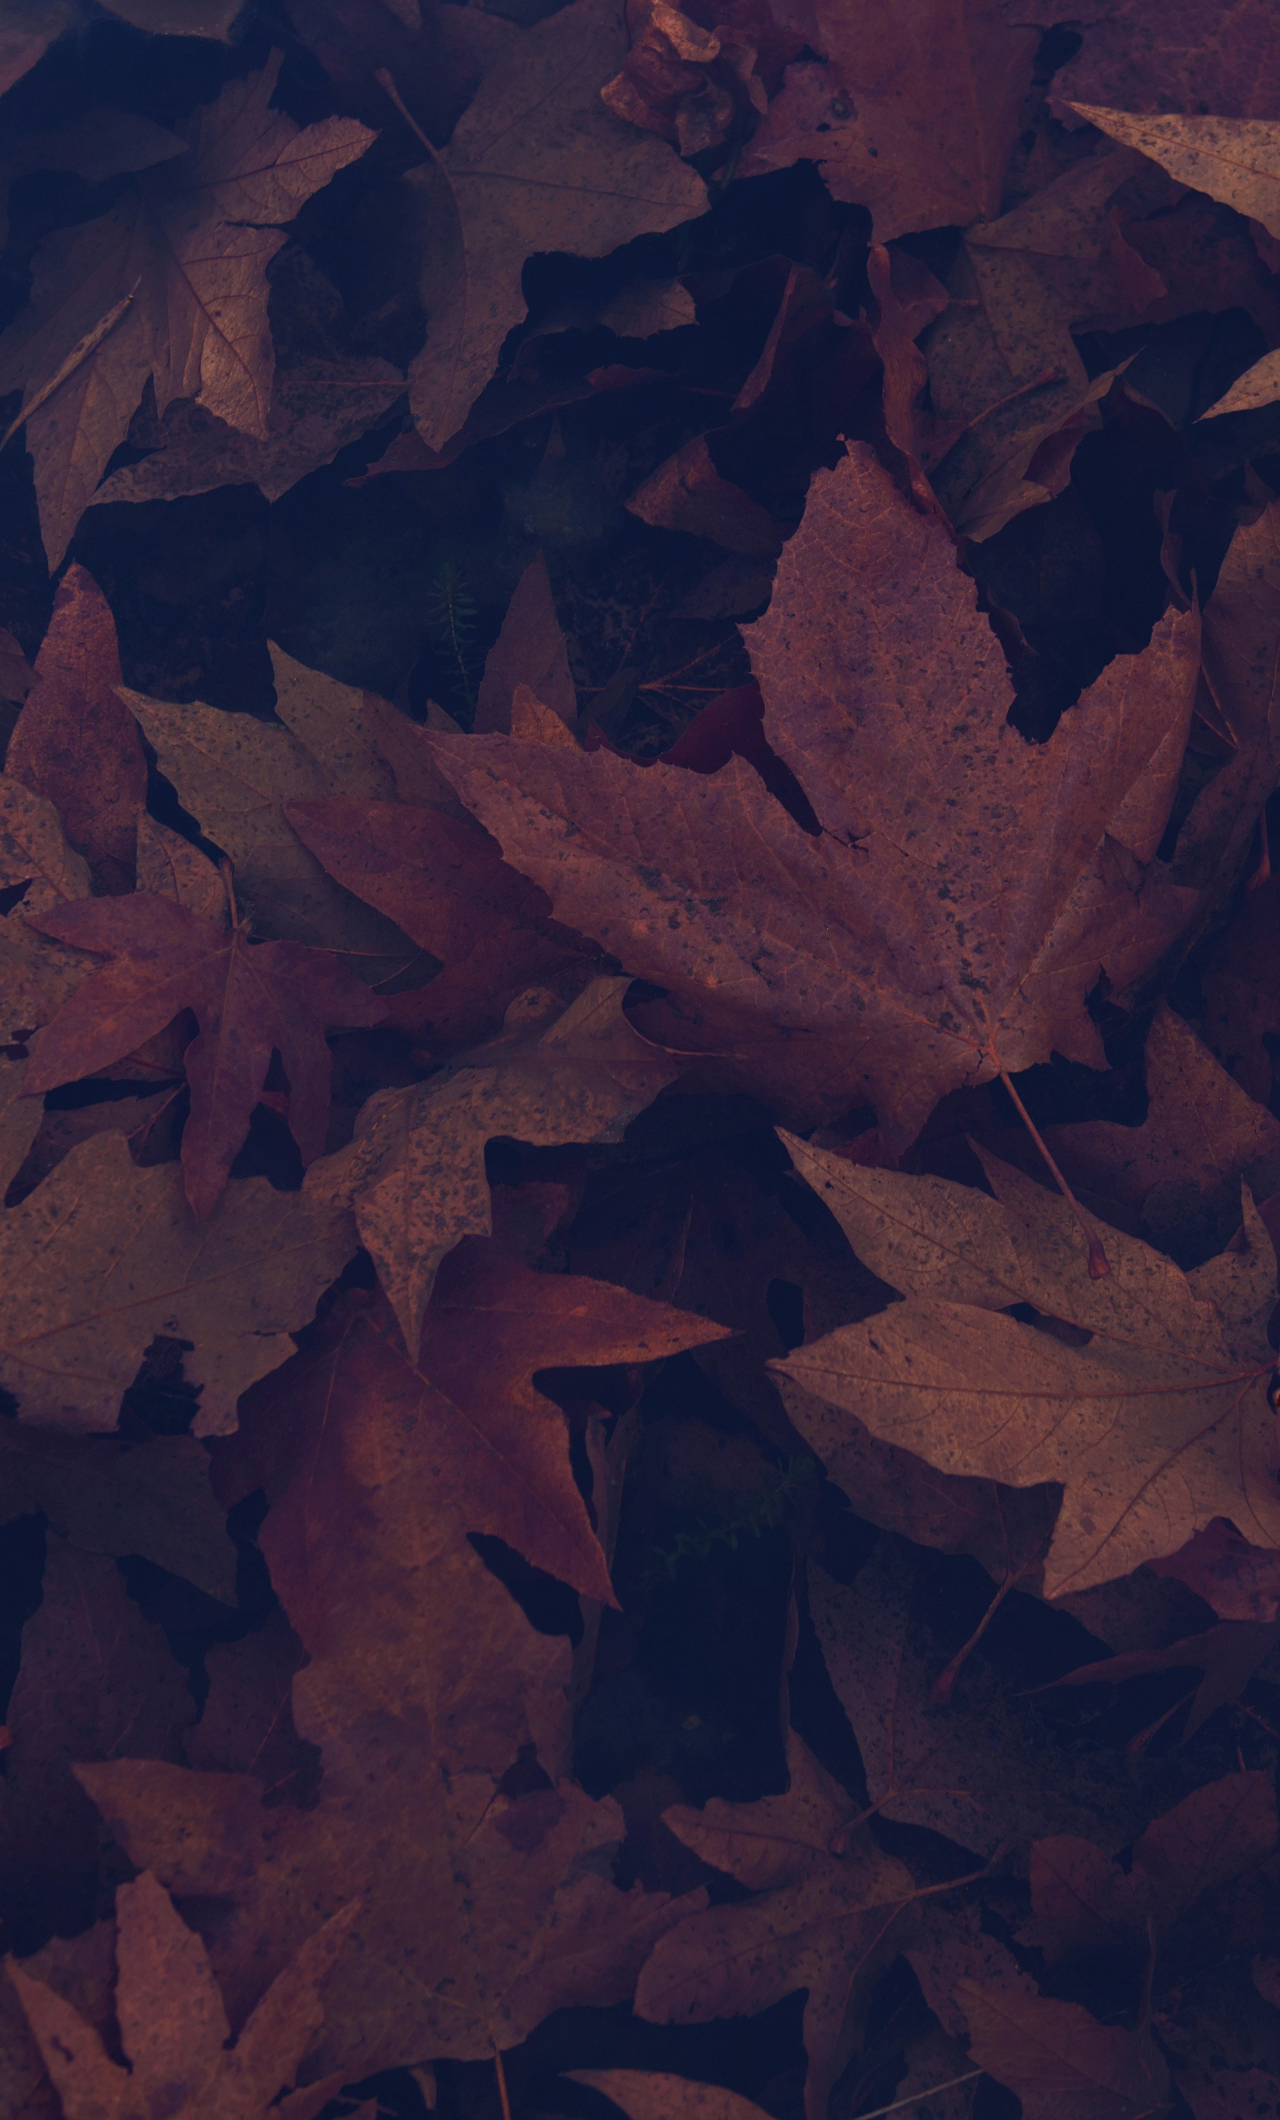 Download dark, portrait, maple leaves, autumn 1280x2120 wallpaper, iphone 6 plus, 1280x2120 HD image, background, 17858